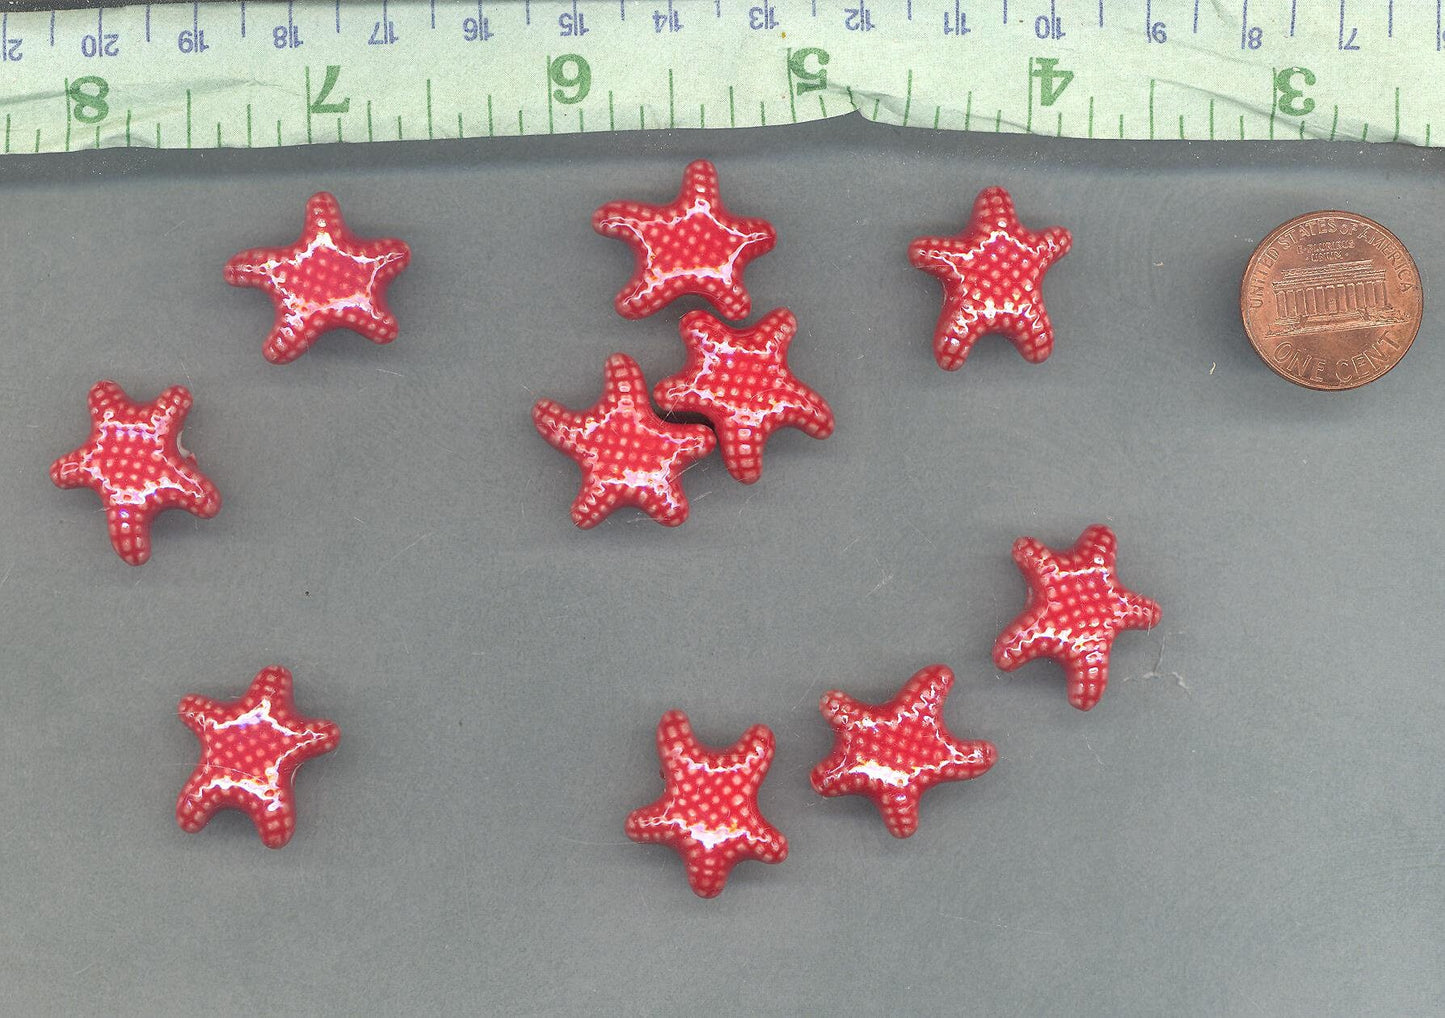 Tomato Red Starfish Beads - Ceramic Mosaic Tiles - 10 Puffy Sea Star - Jewelry Supplies